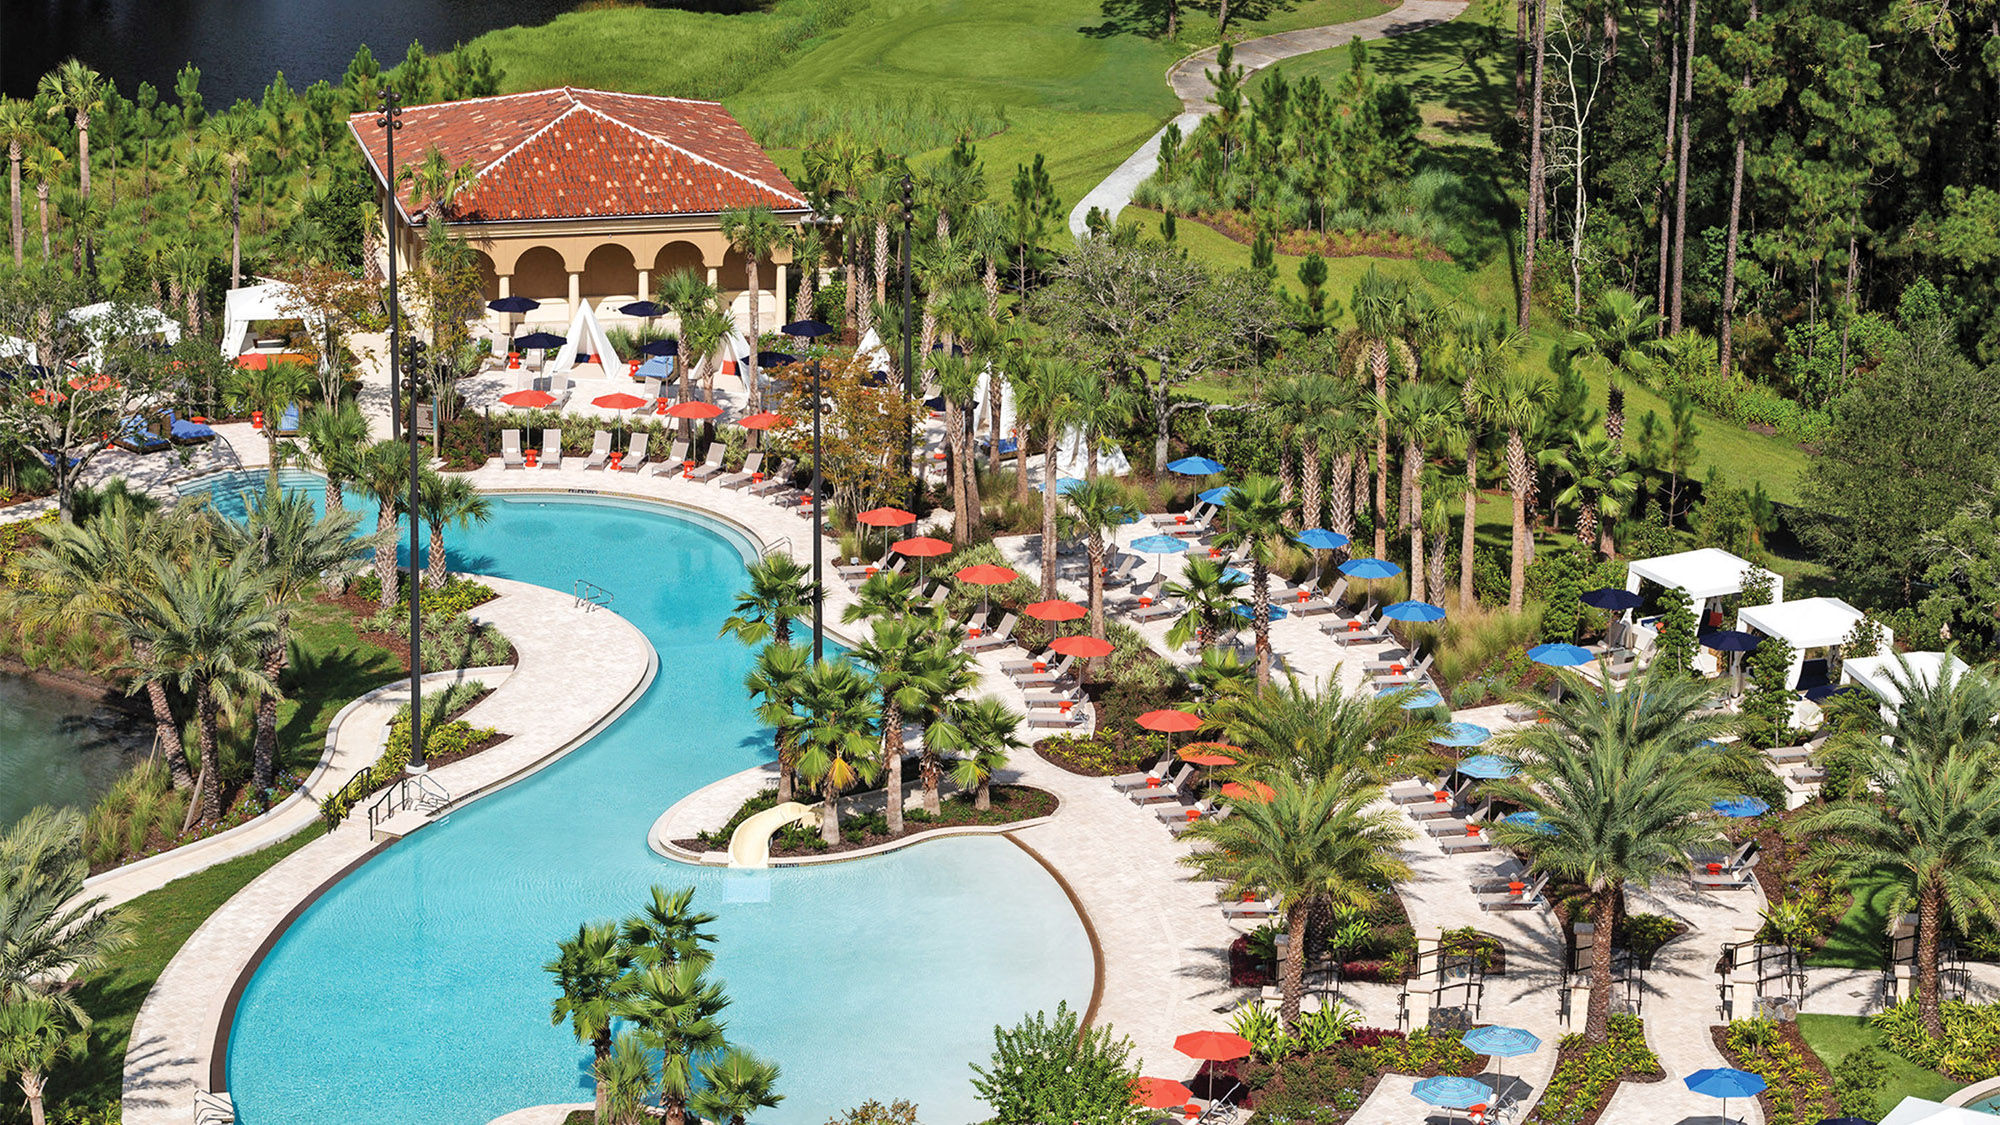 The Family Pool at the Four Seasons Resort Orlando at Walt Disney World Resort.